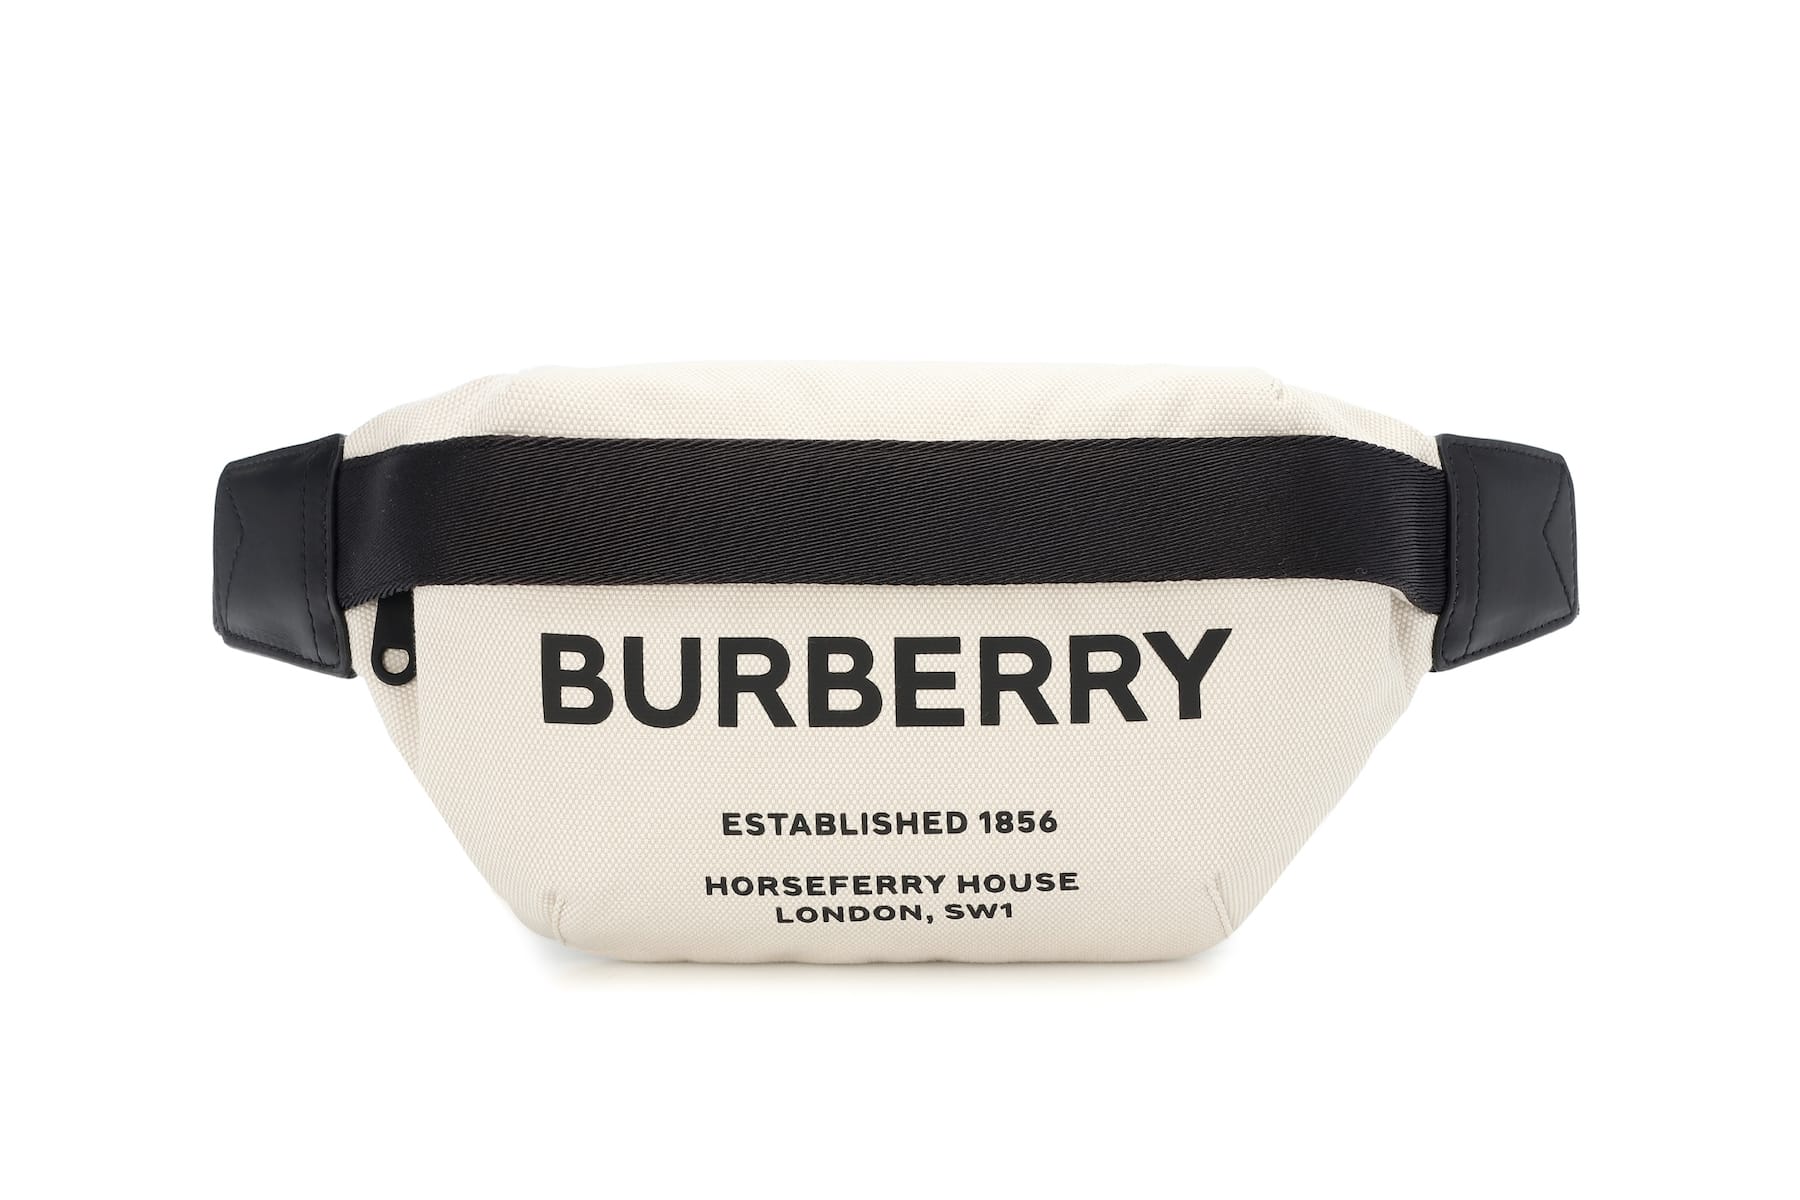 burberry belt bag 2019